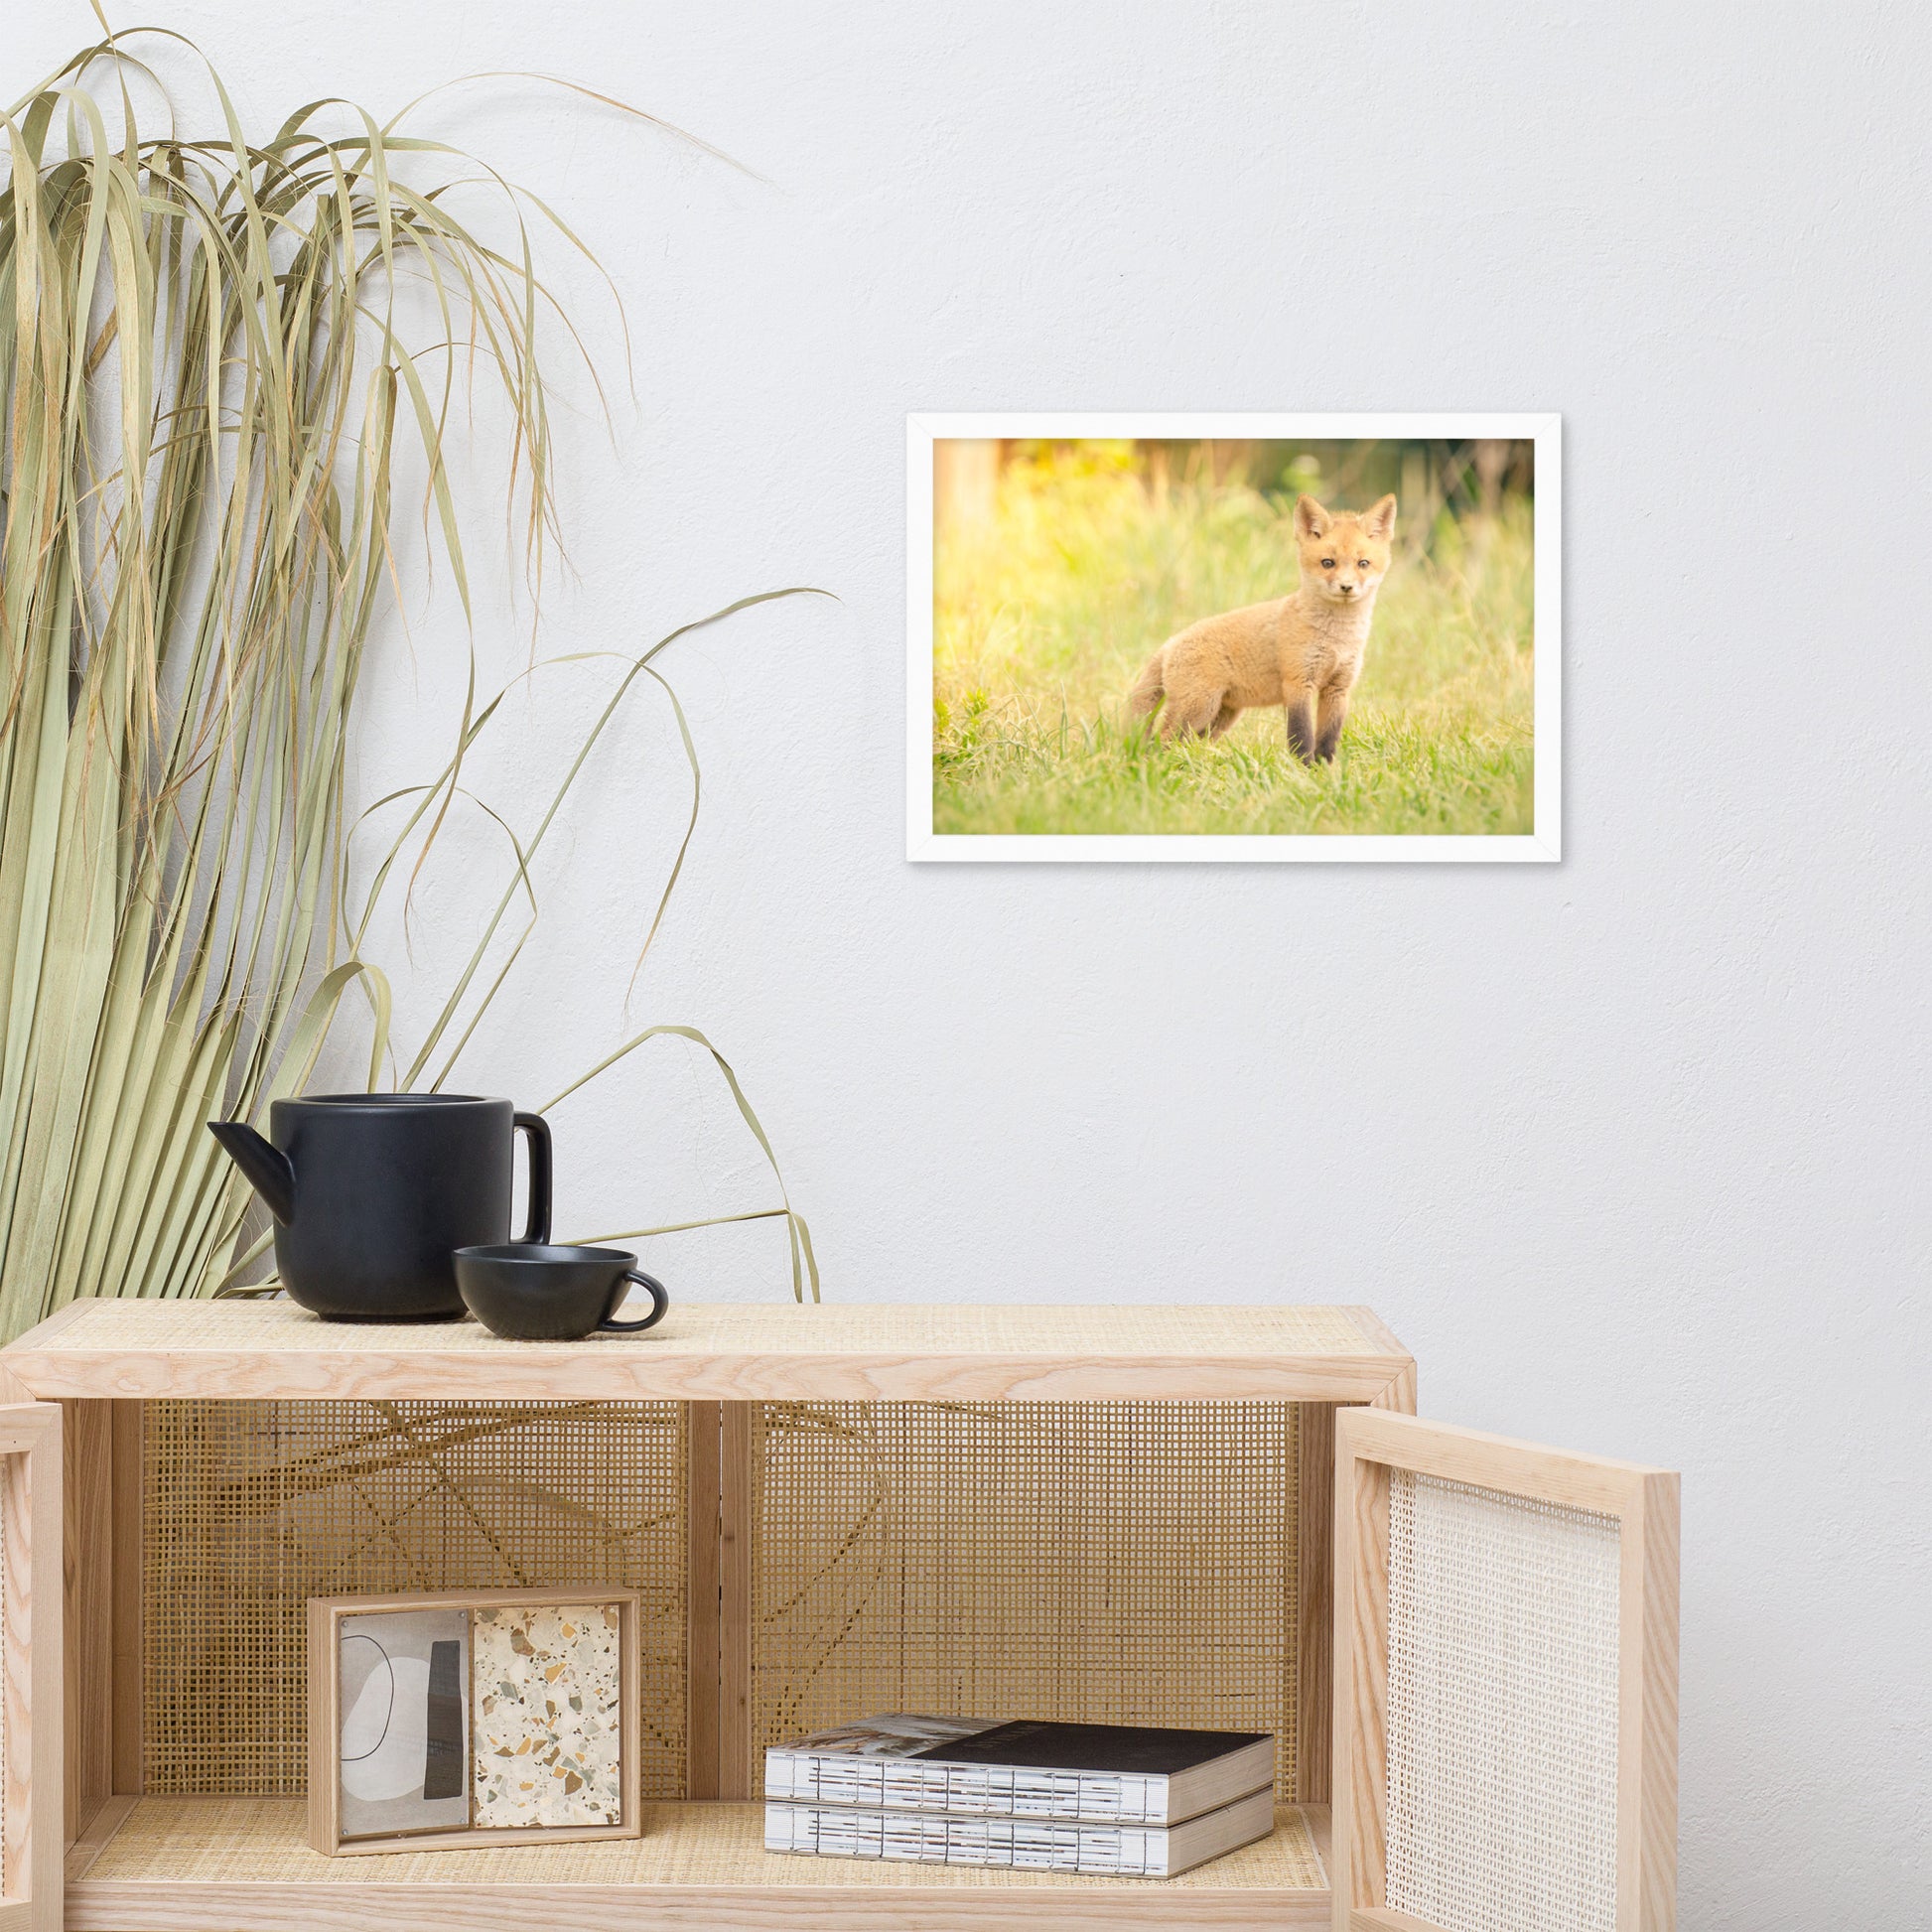 Hanging Art Over Crib: Baby Red Fox in the Sun - Animal / Wildlife / Nature Artwork - Wall Decor - Framed Wall Art Print